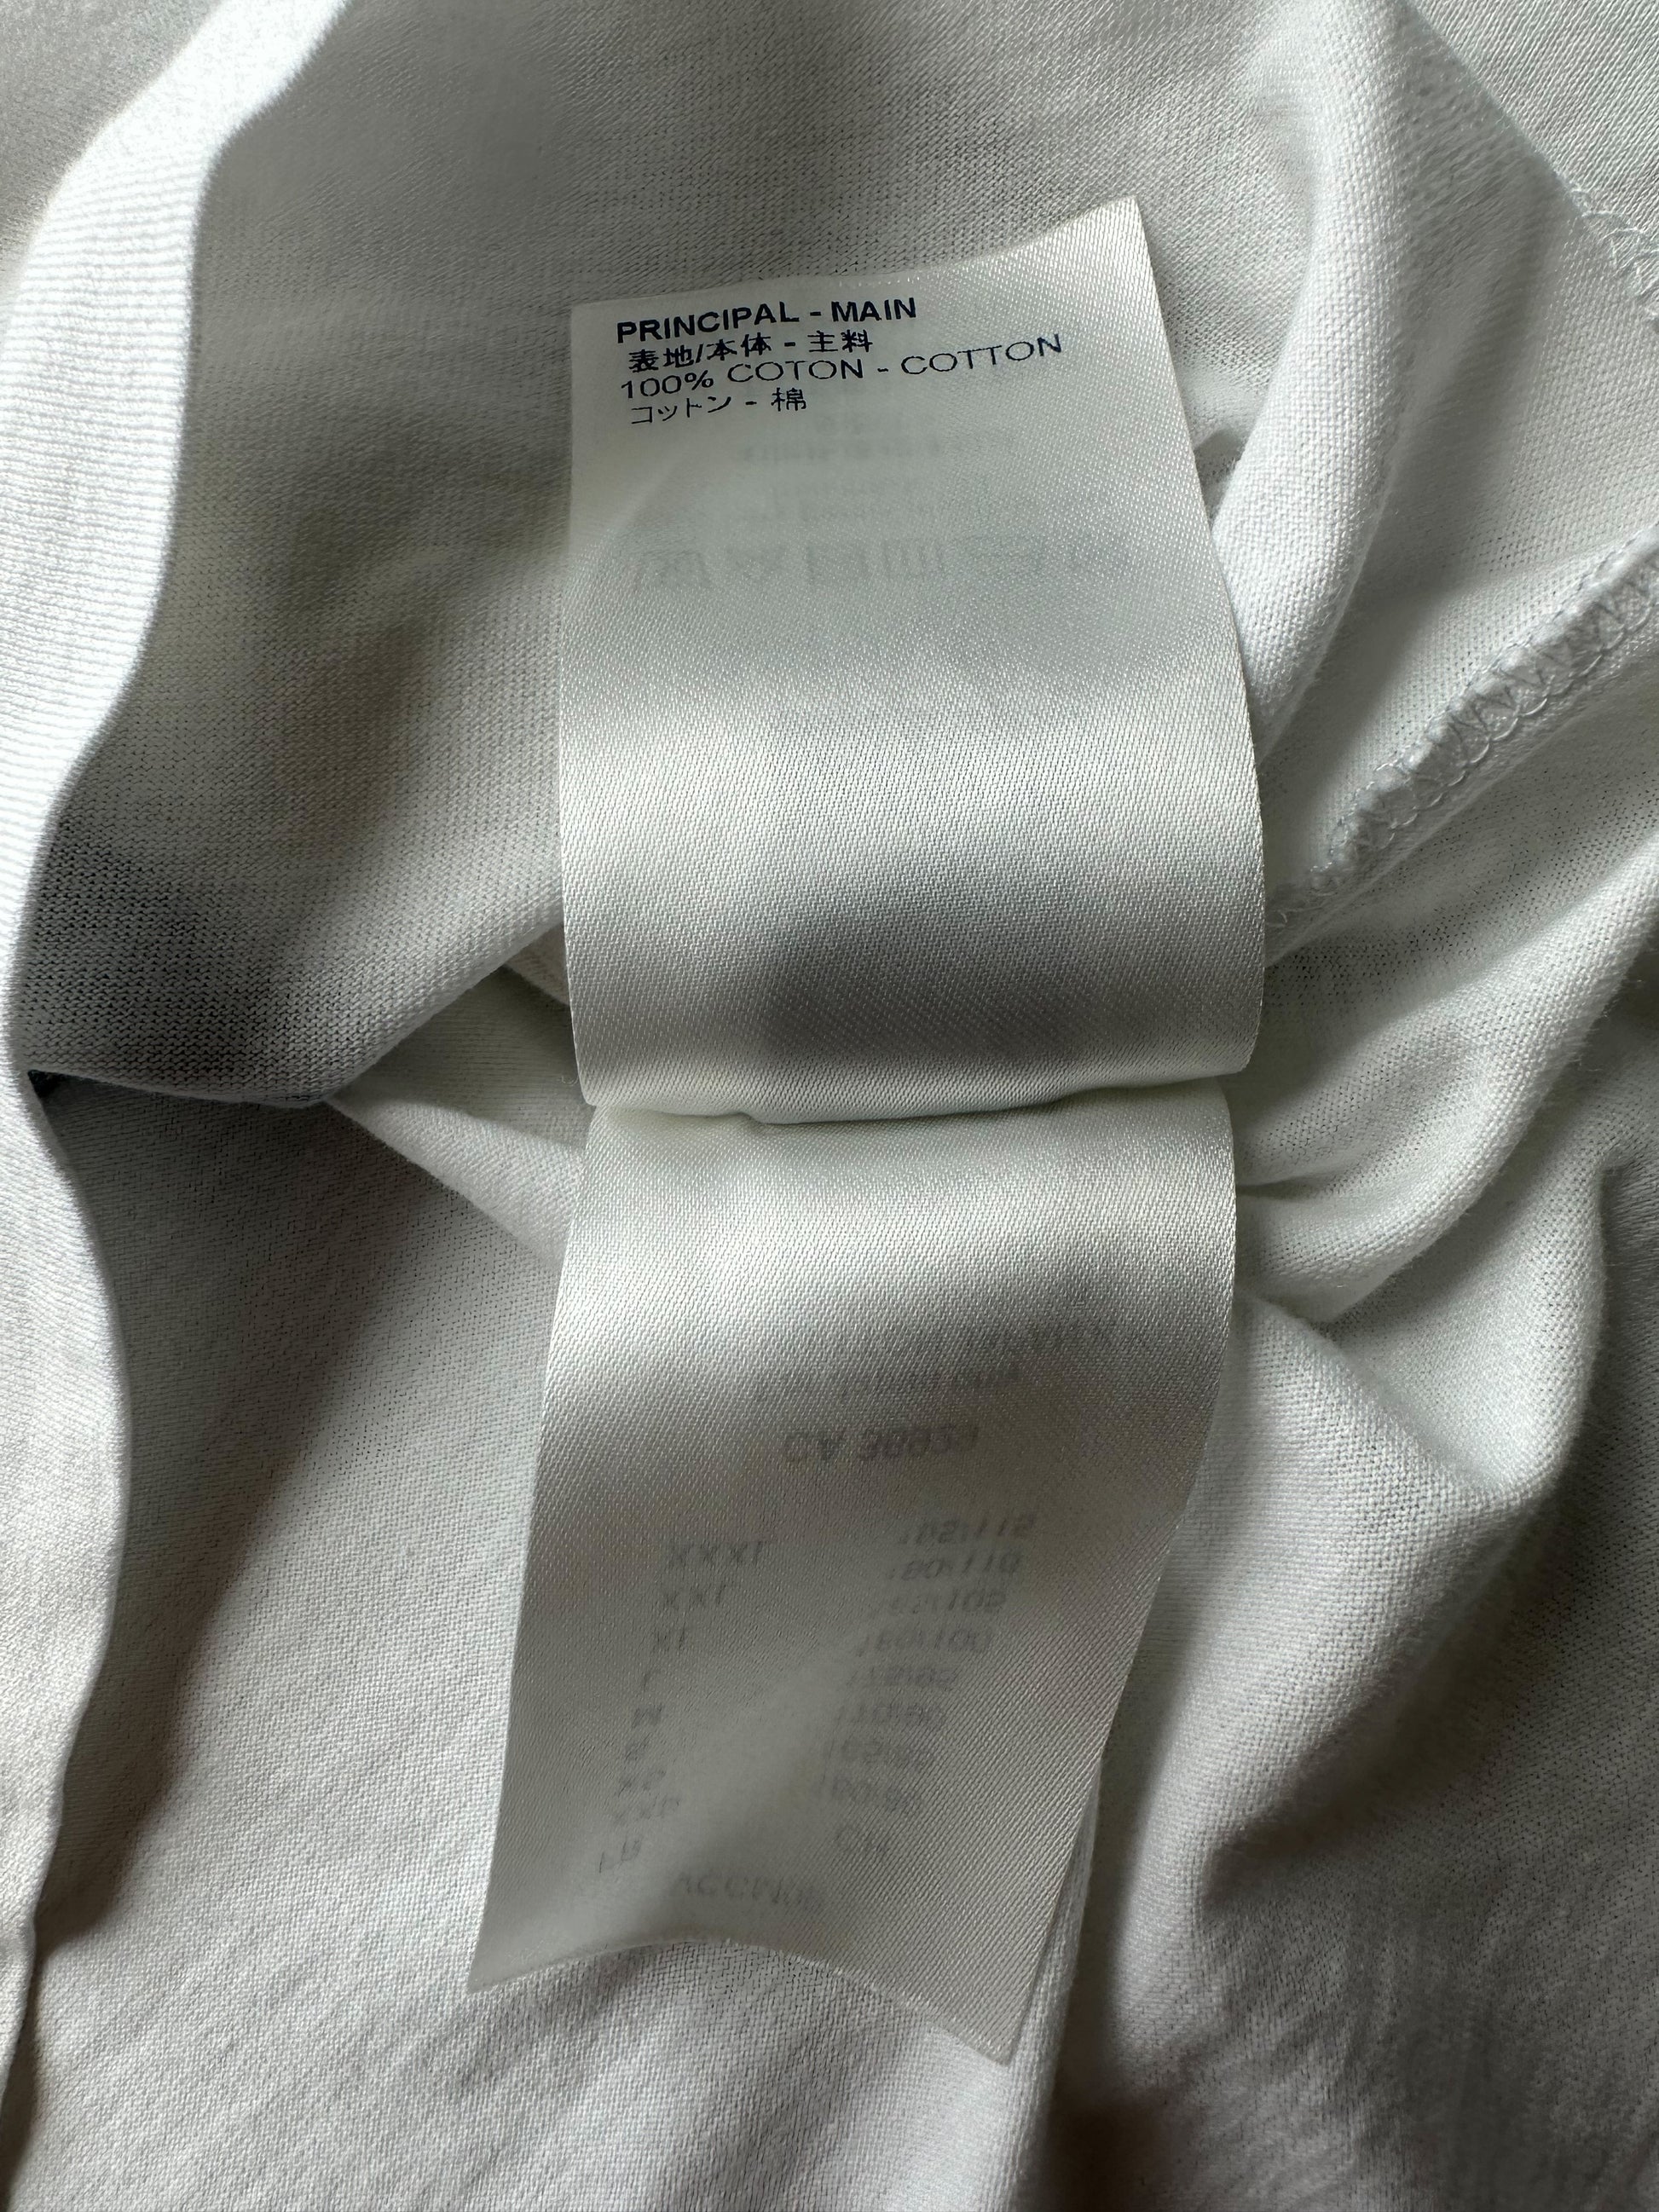 Louis Vuitton 1854 T-shirt – Modalite Prive